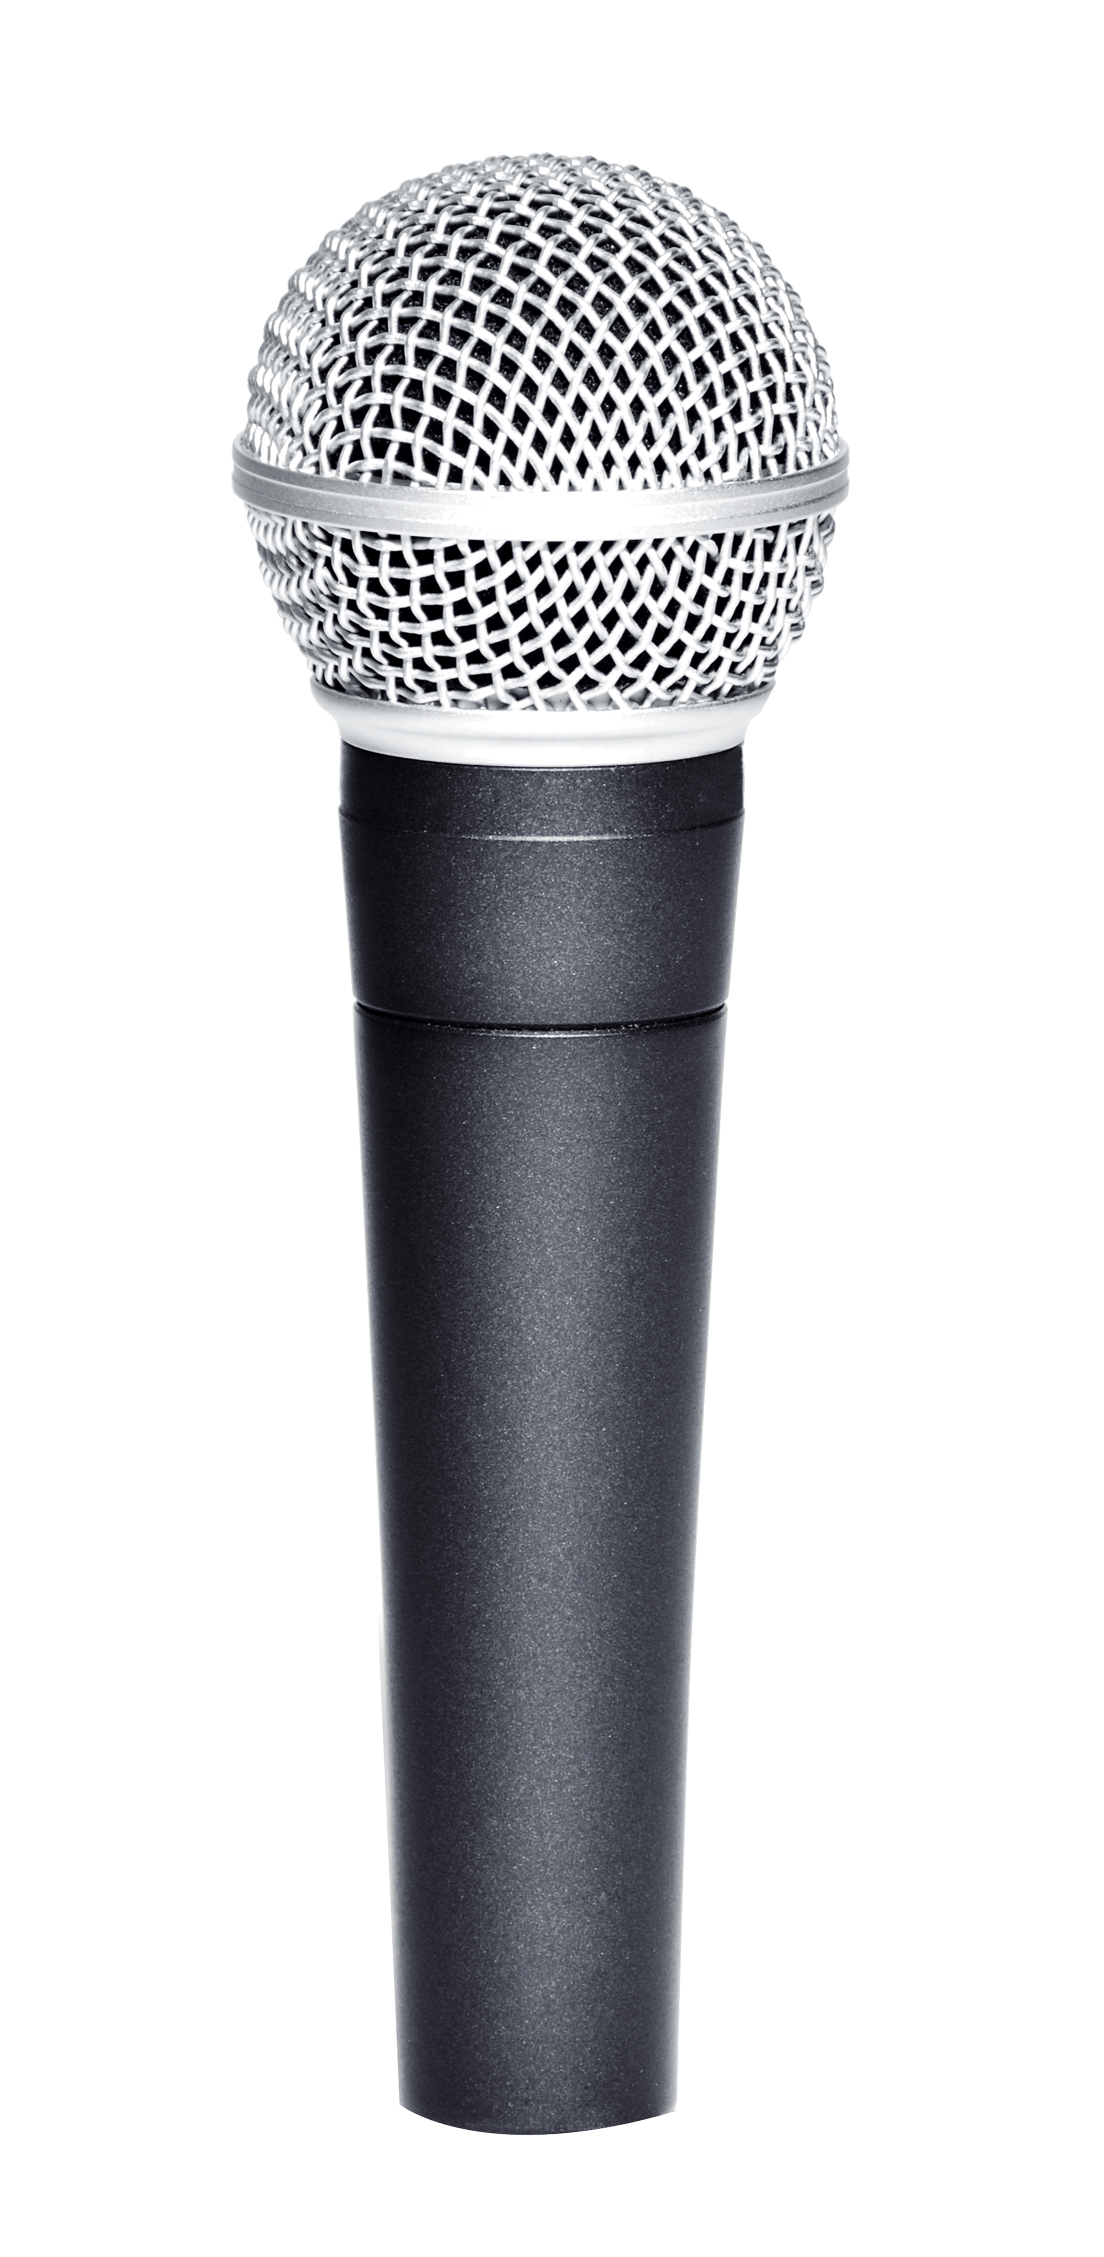 Microphone clipart transparent.